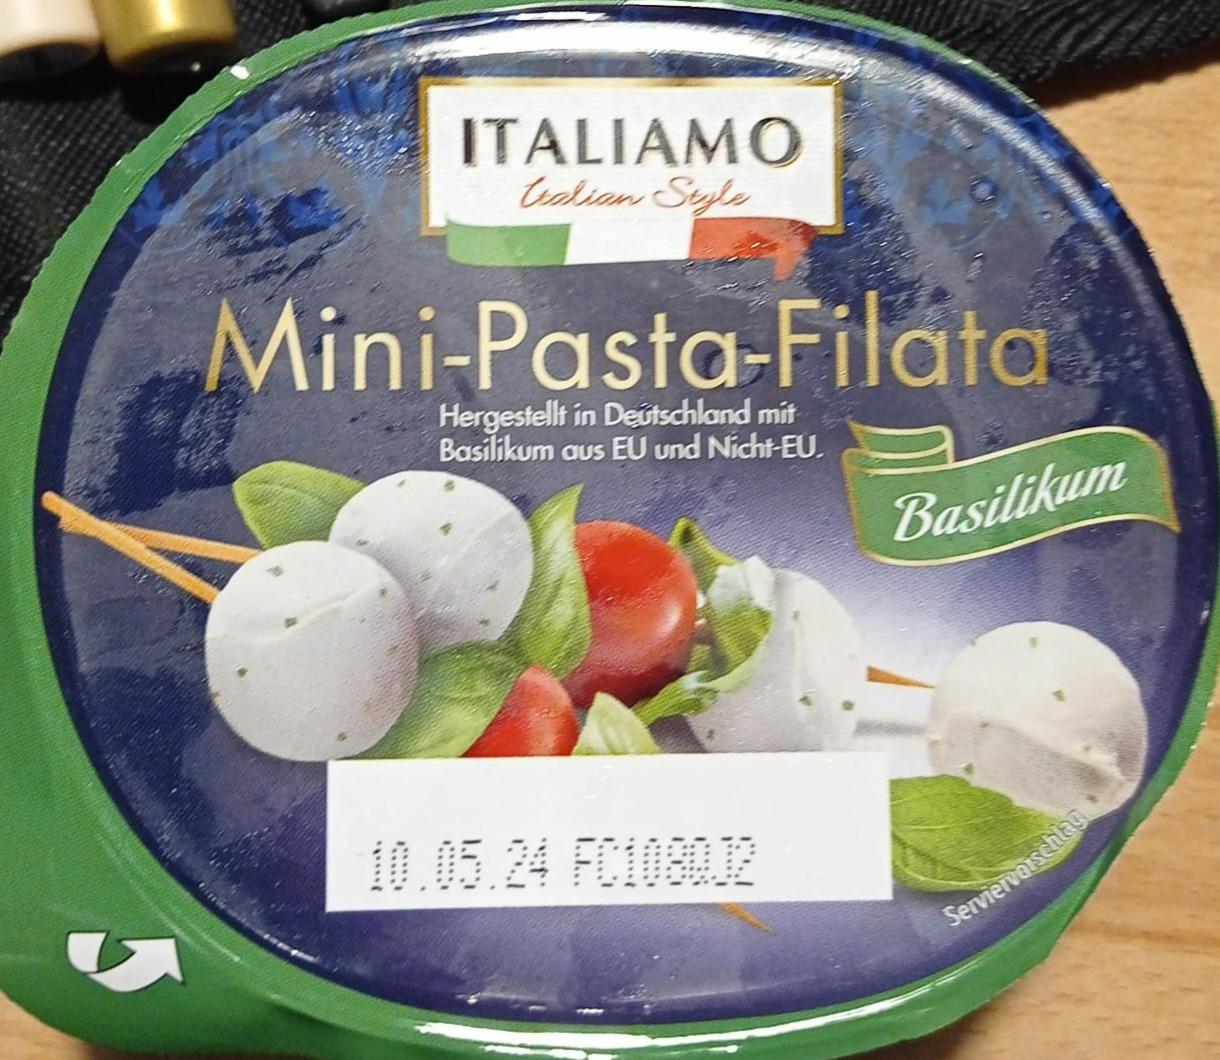 Fotografie - Mini Pasta Filata Basilikum Italiamo